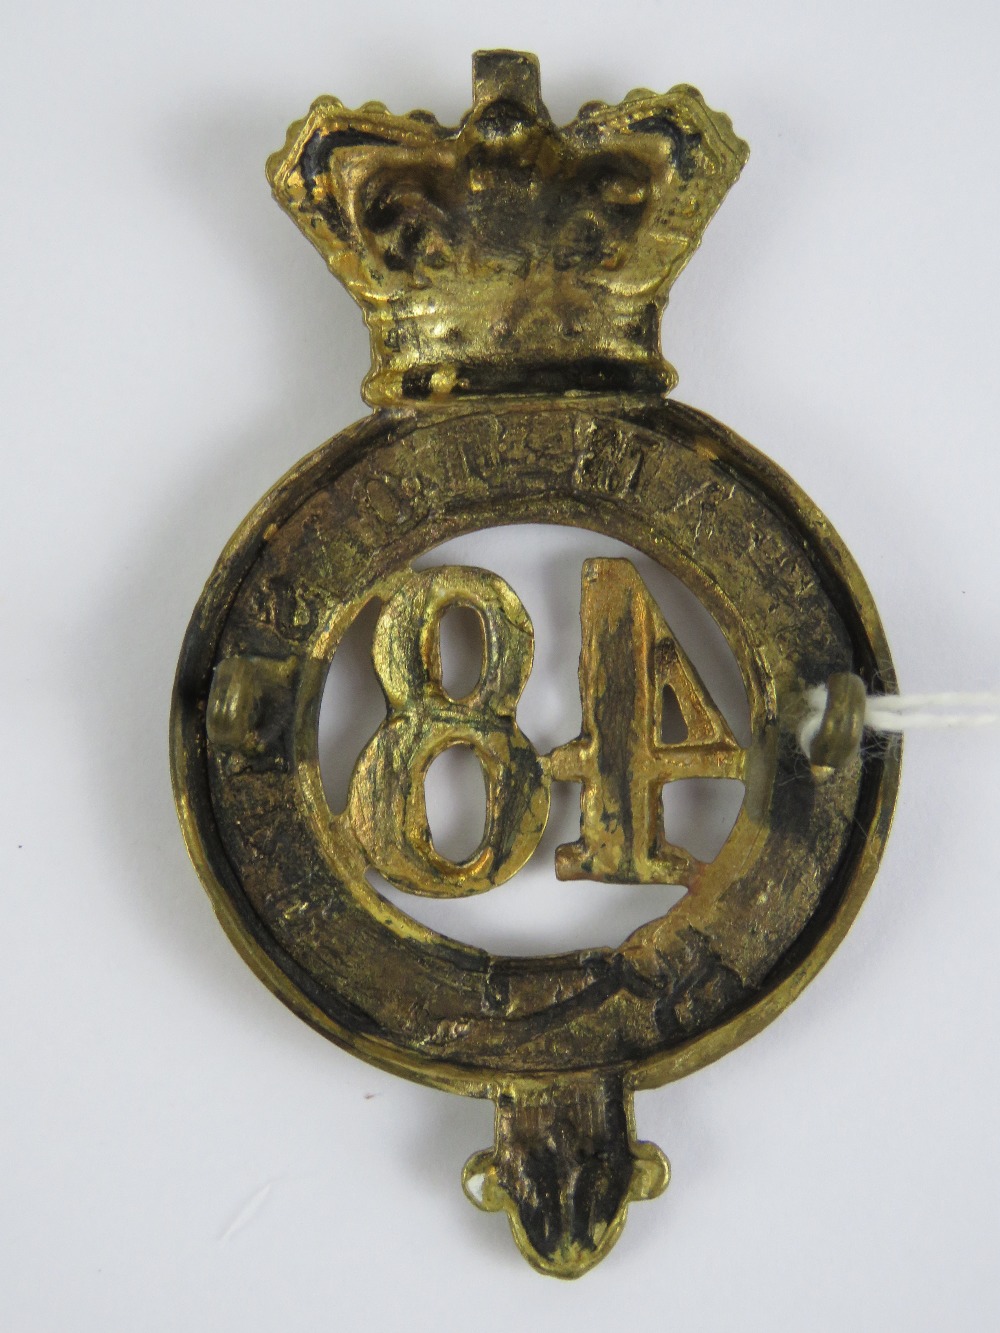 A British 48th Regiment Glengarry badge, Northamptonshire Regiment, measuring 7cm high. - Image 2 of 2